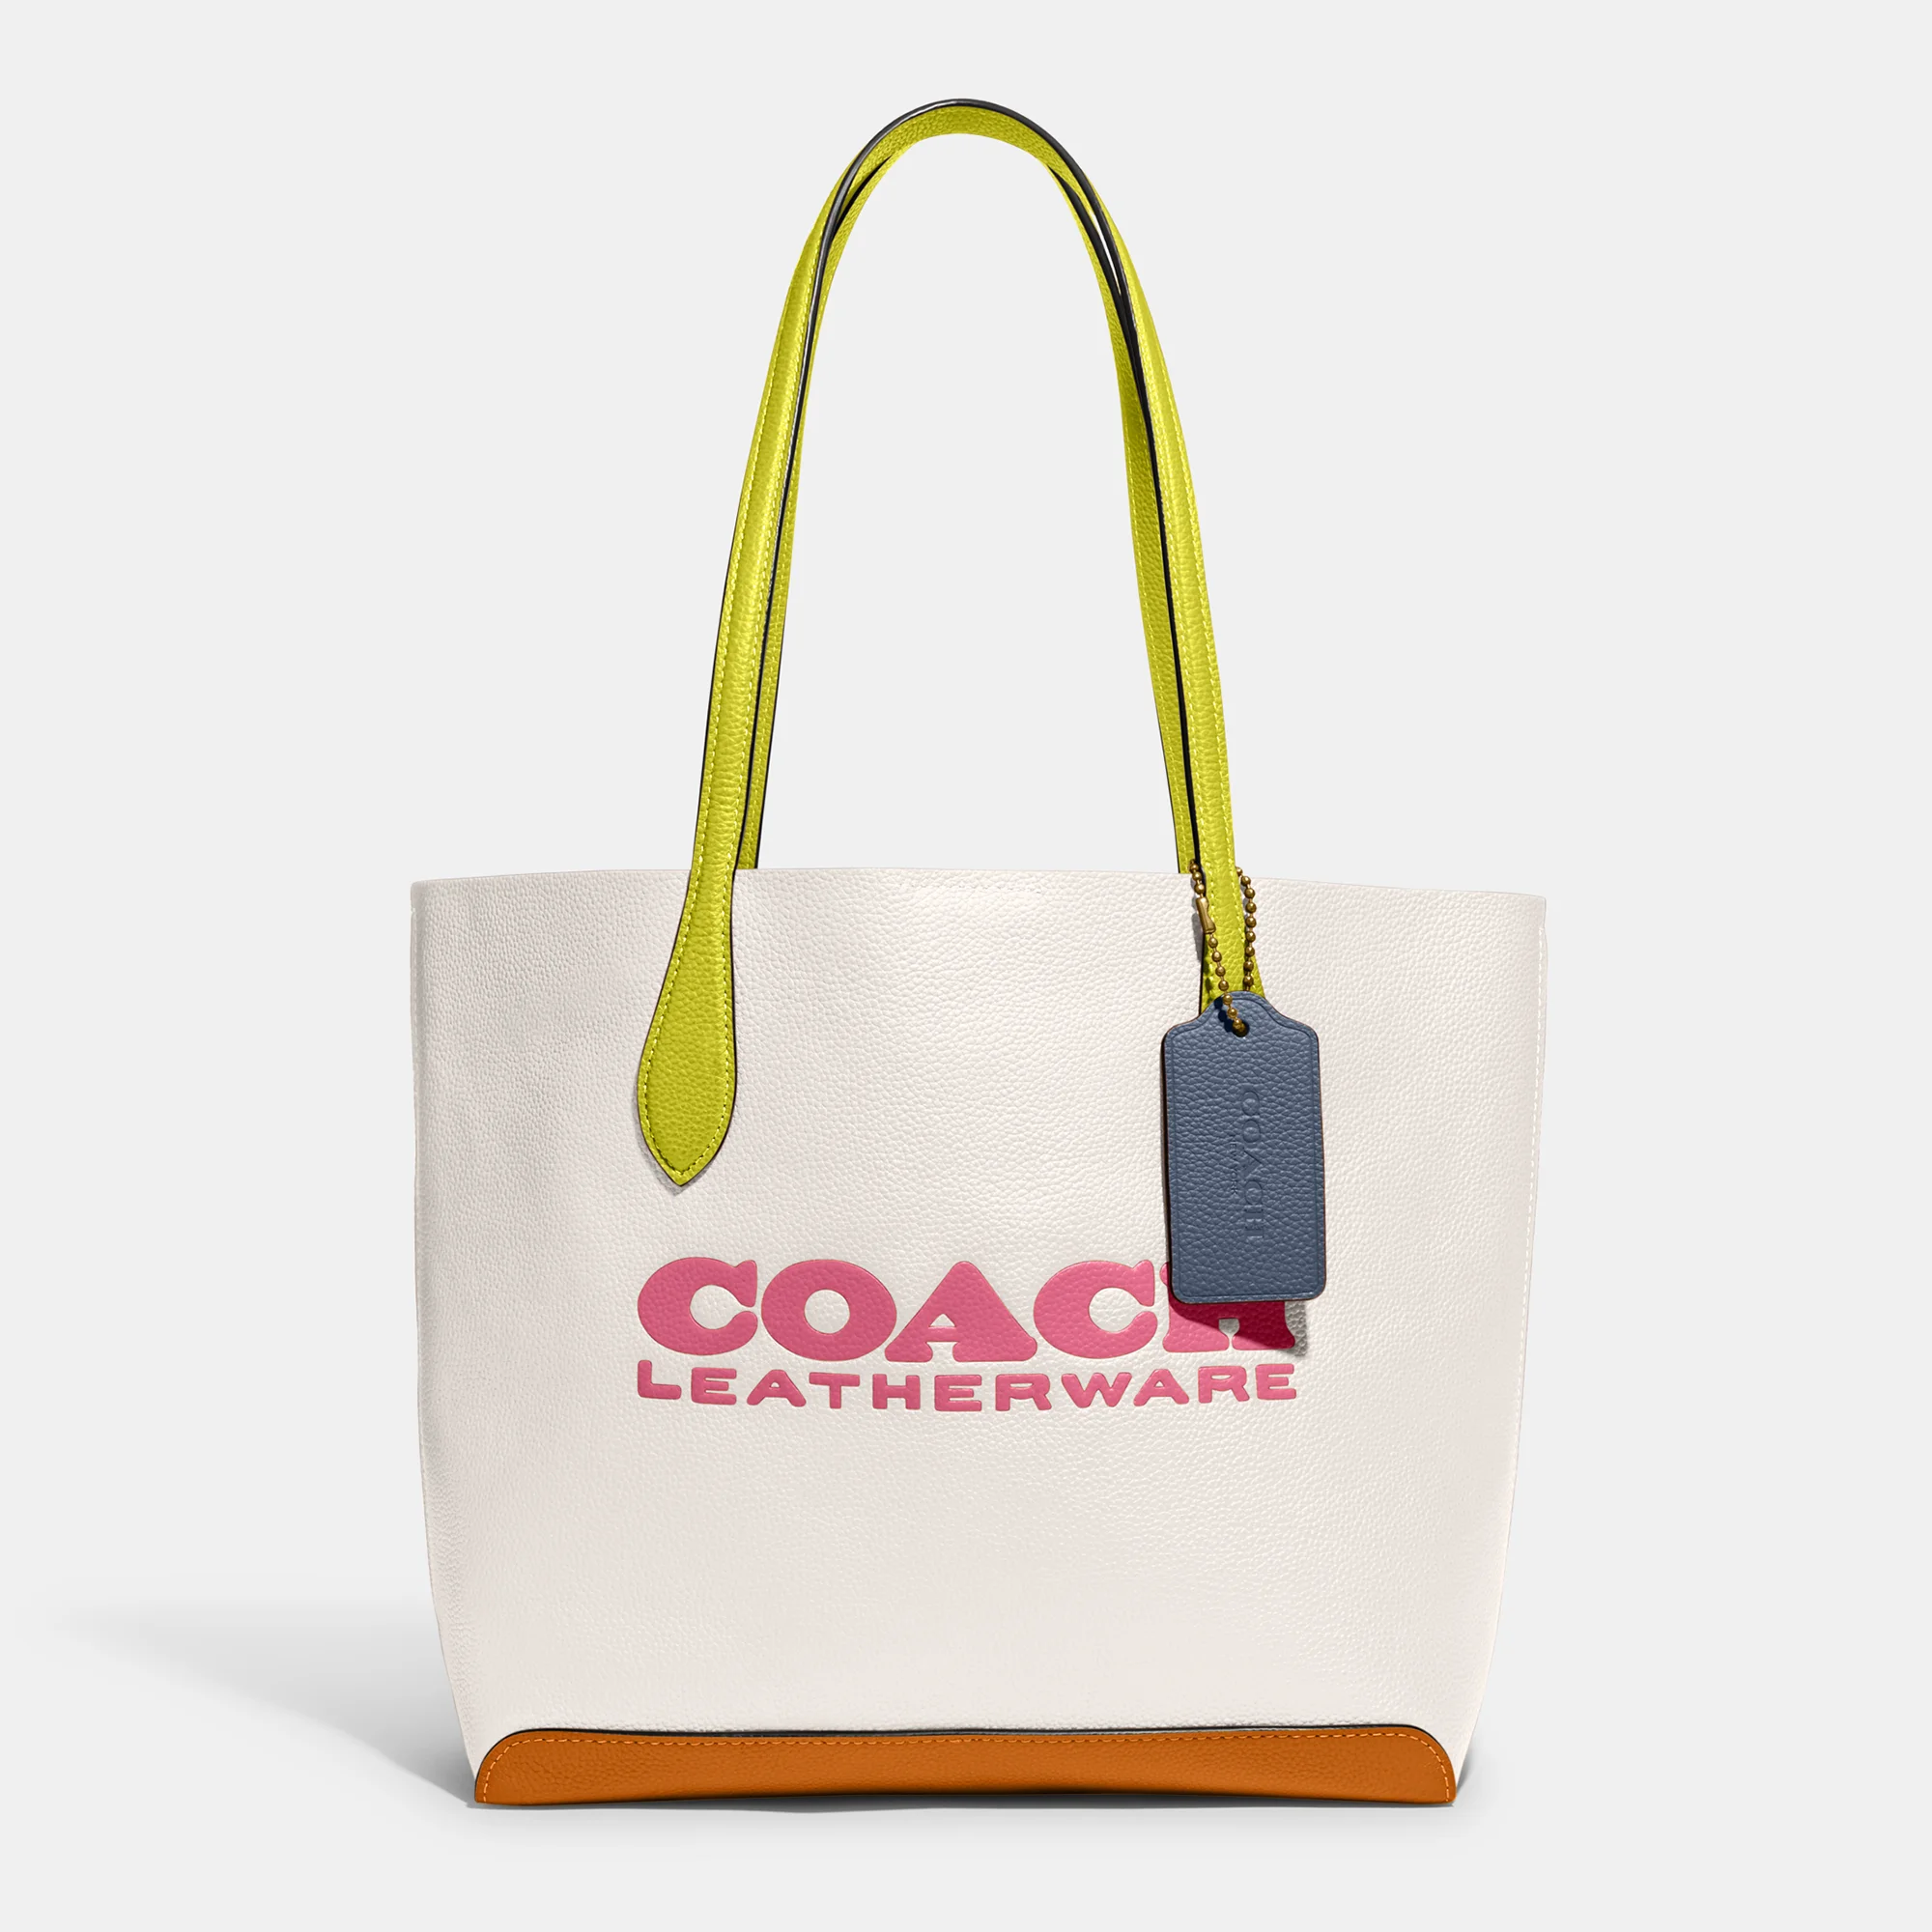 Coach Women's Colorblock Leather Kia Tote Bag - Chalk Multi Image 1